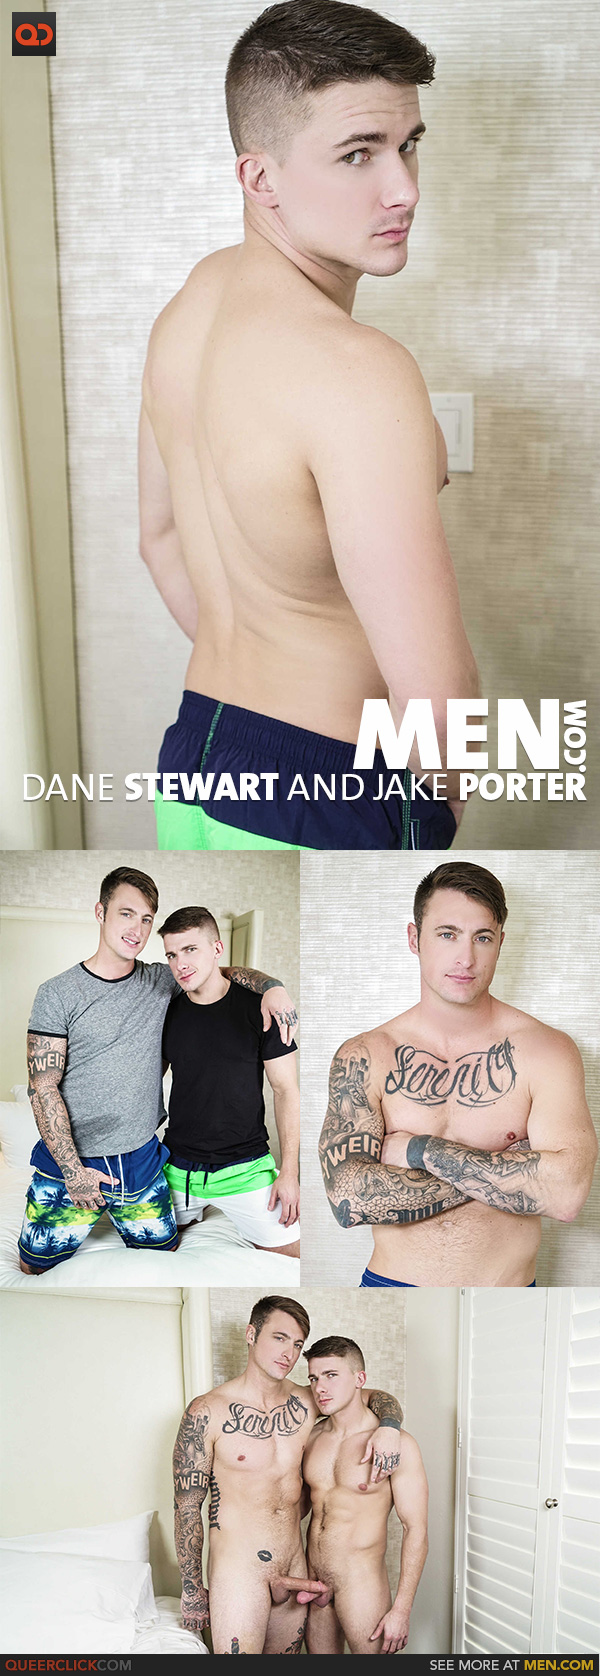 Men.com:  Dane Stewart and Jake Porter